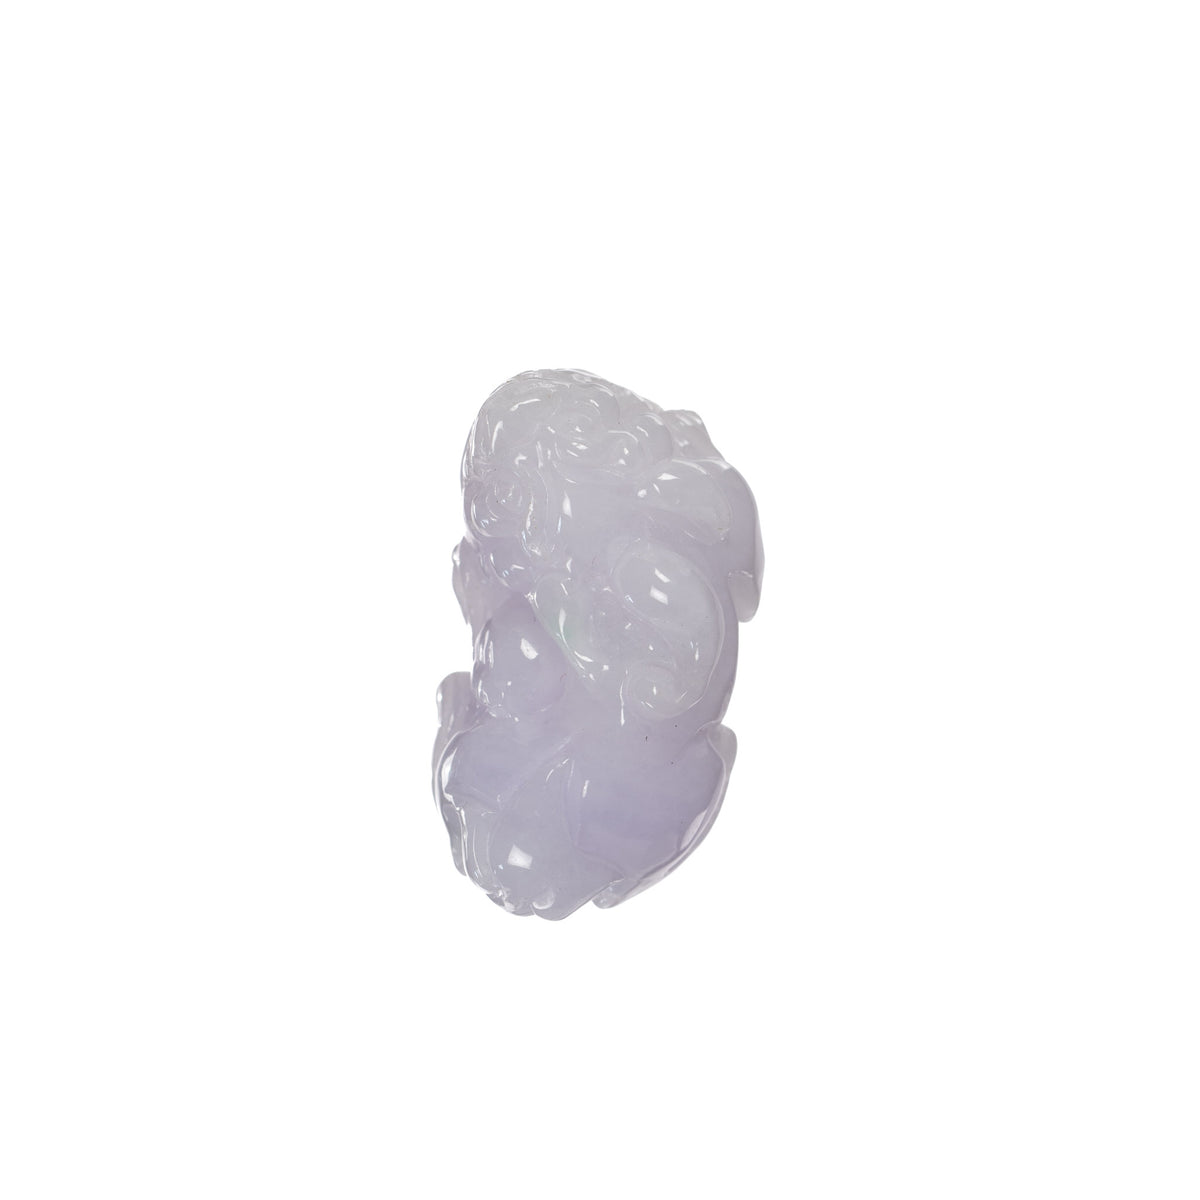 Pale Lavender Pixiu Jade Pendant - Natural Burmese Jadeite